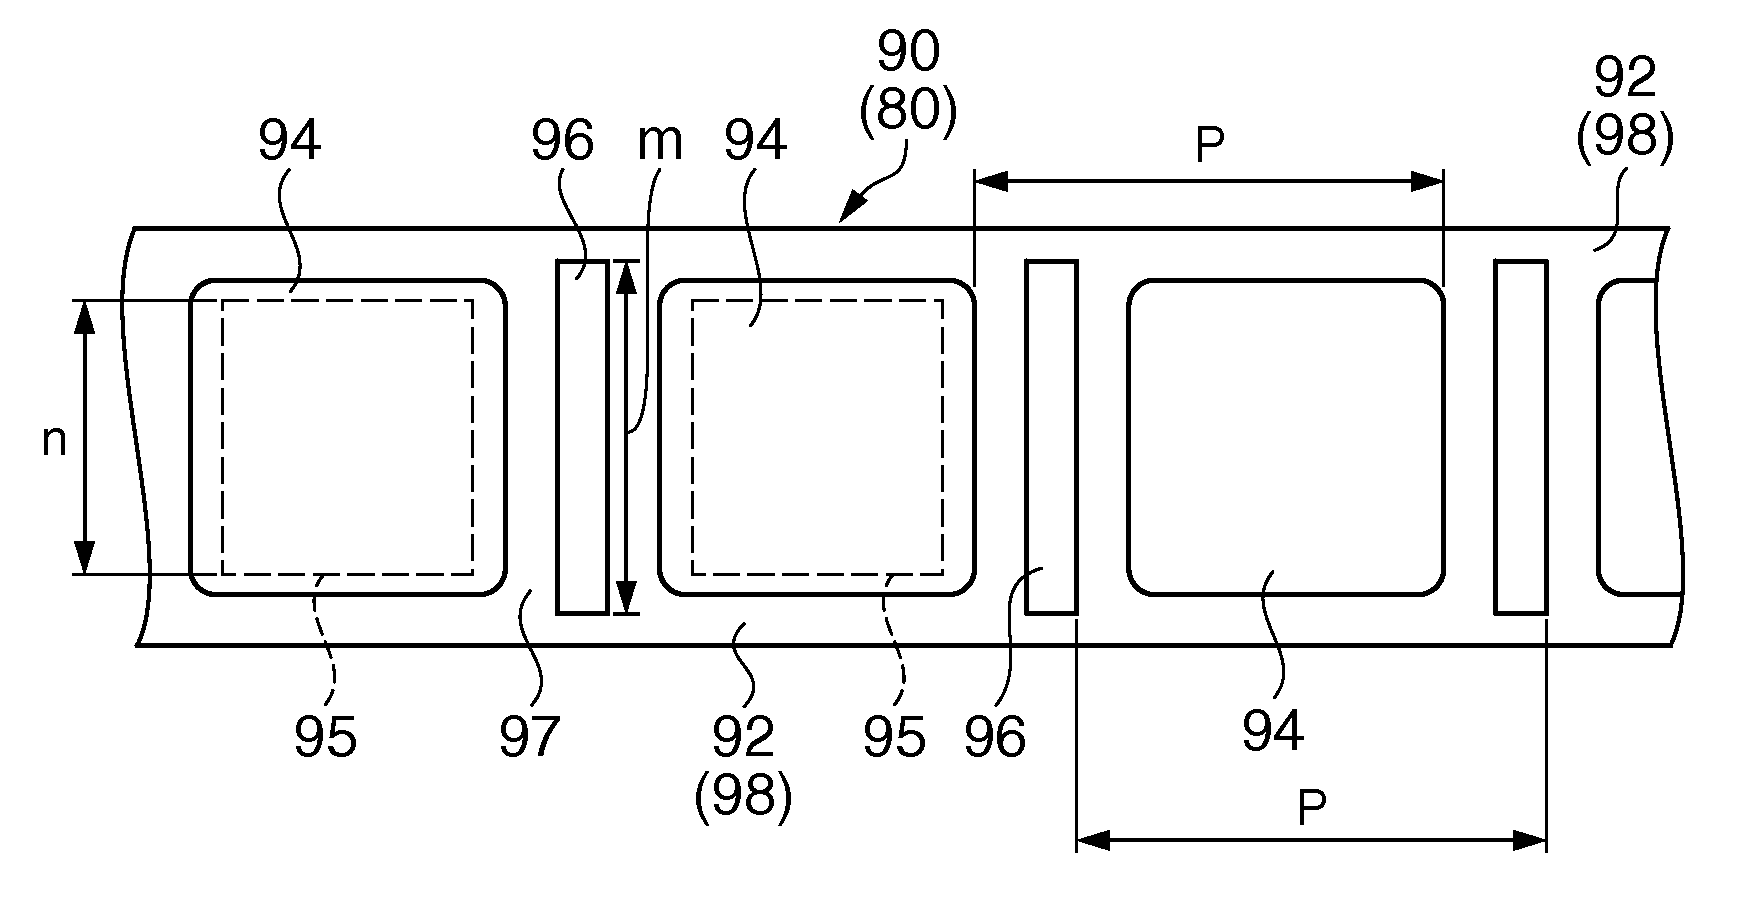 Paper used in an inkjet printer, inkjet printer, and preliminary ejection method for an inkjet printer